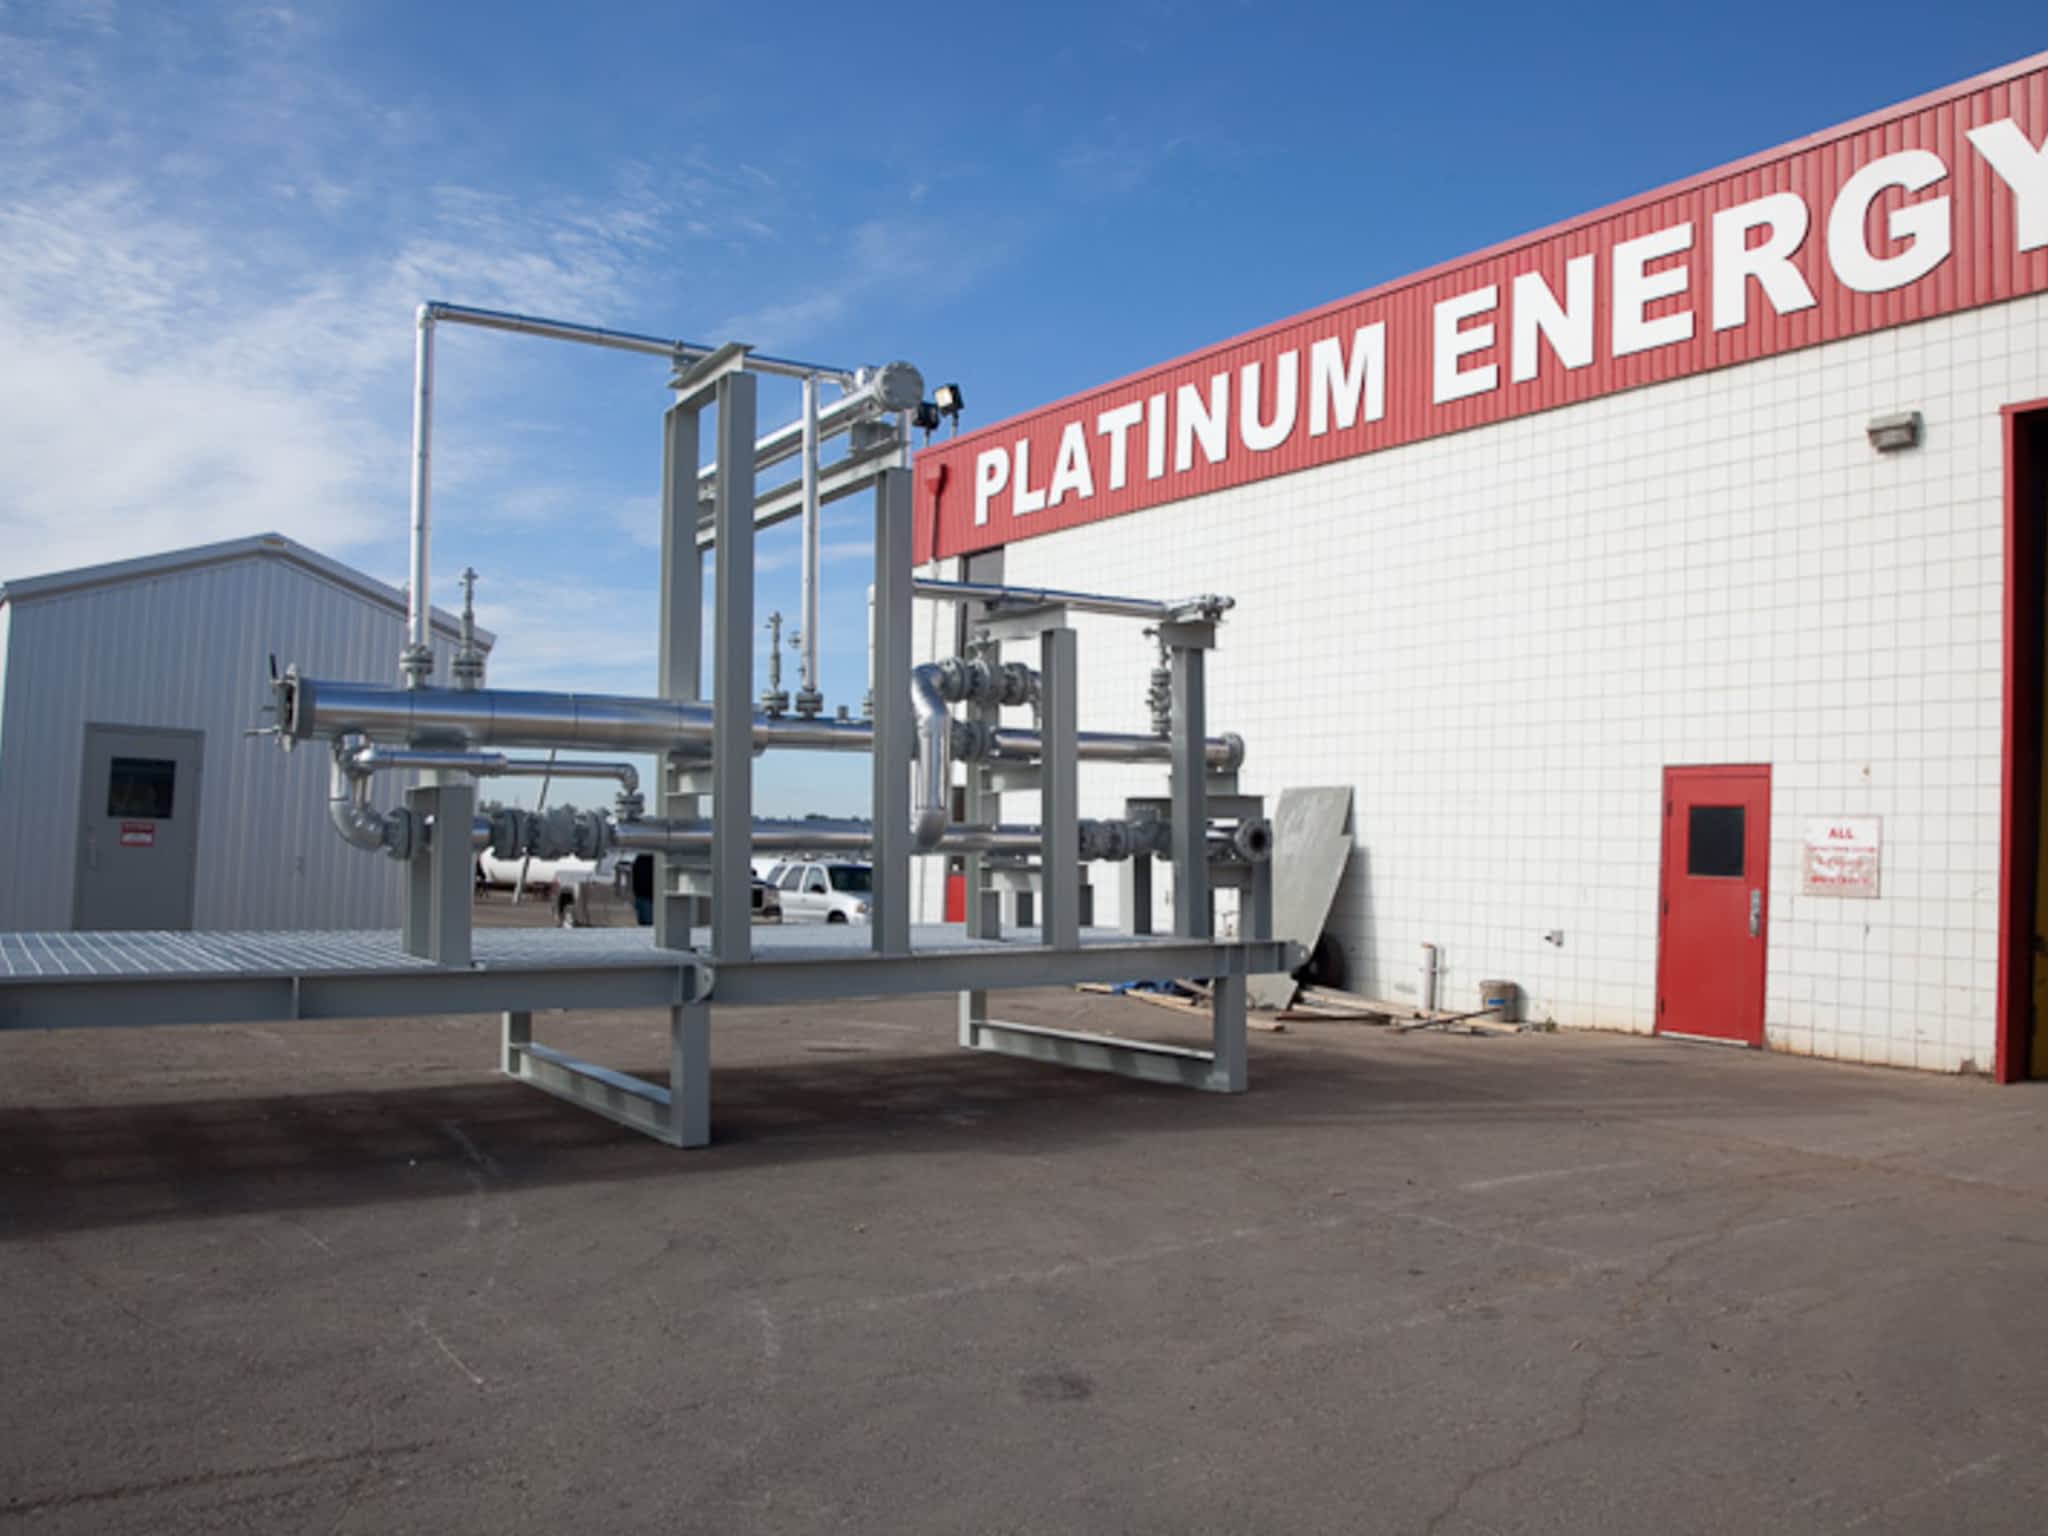 photo Platinum Energy Services ULC